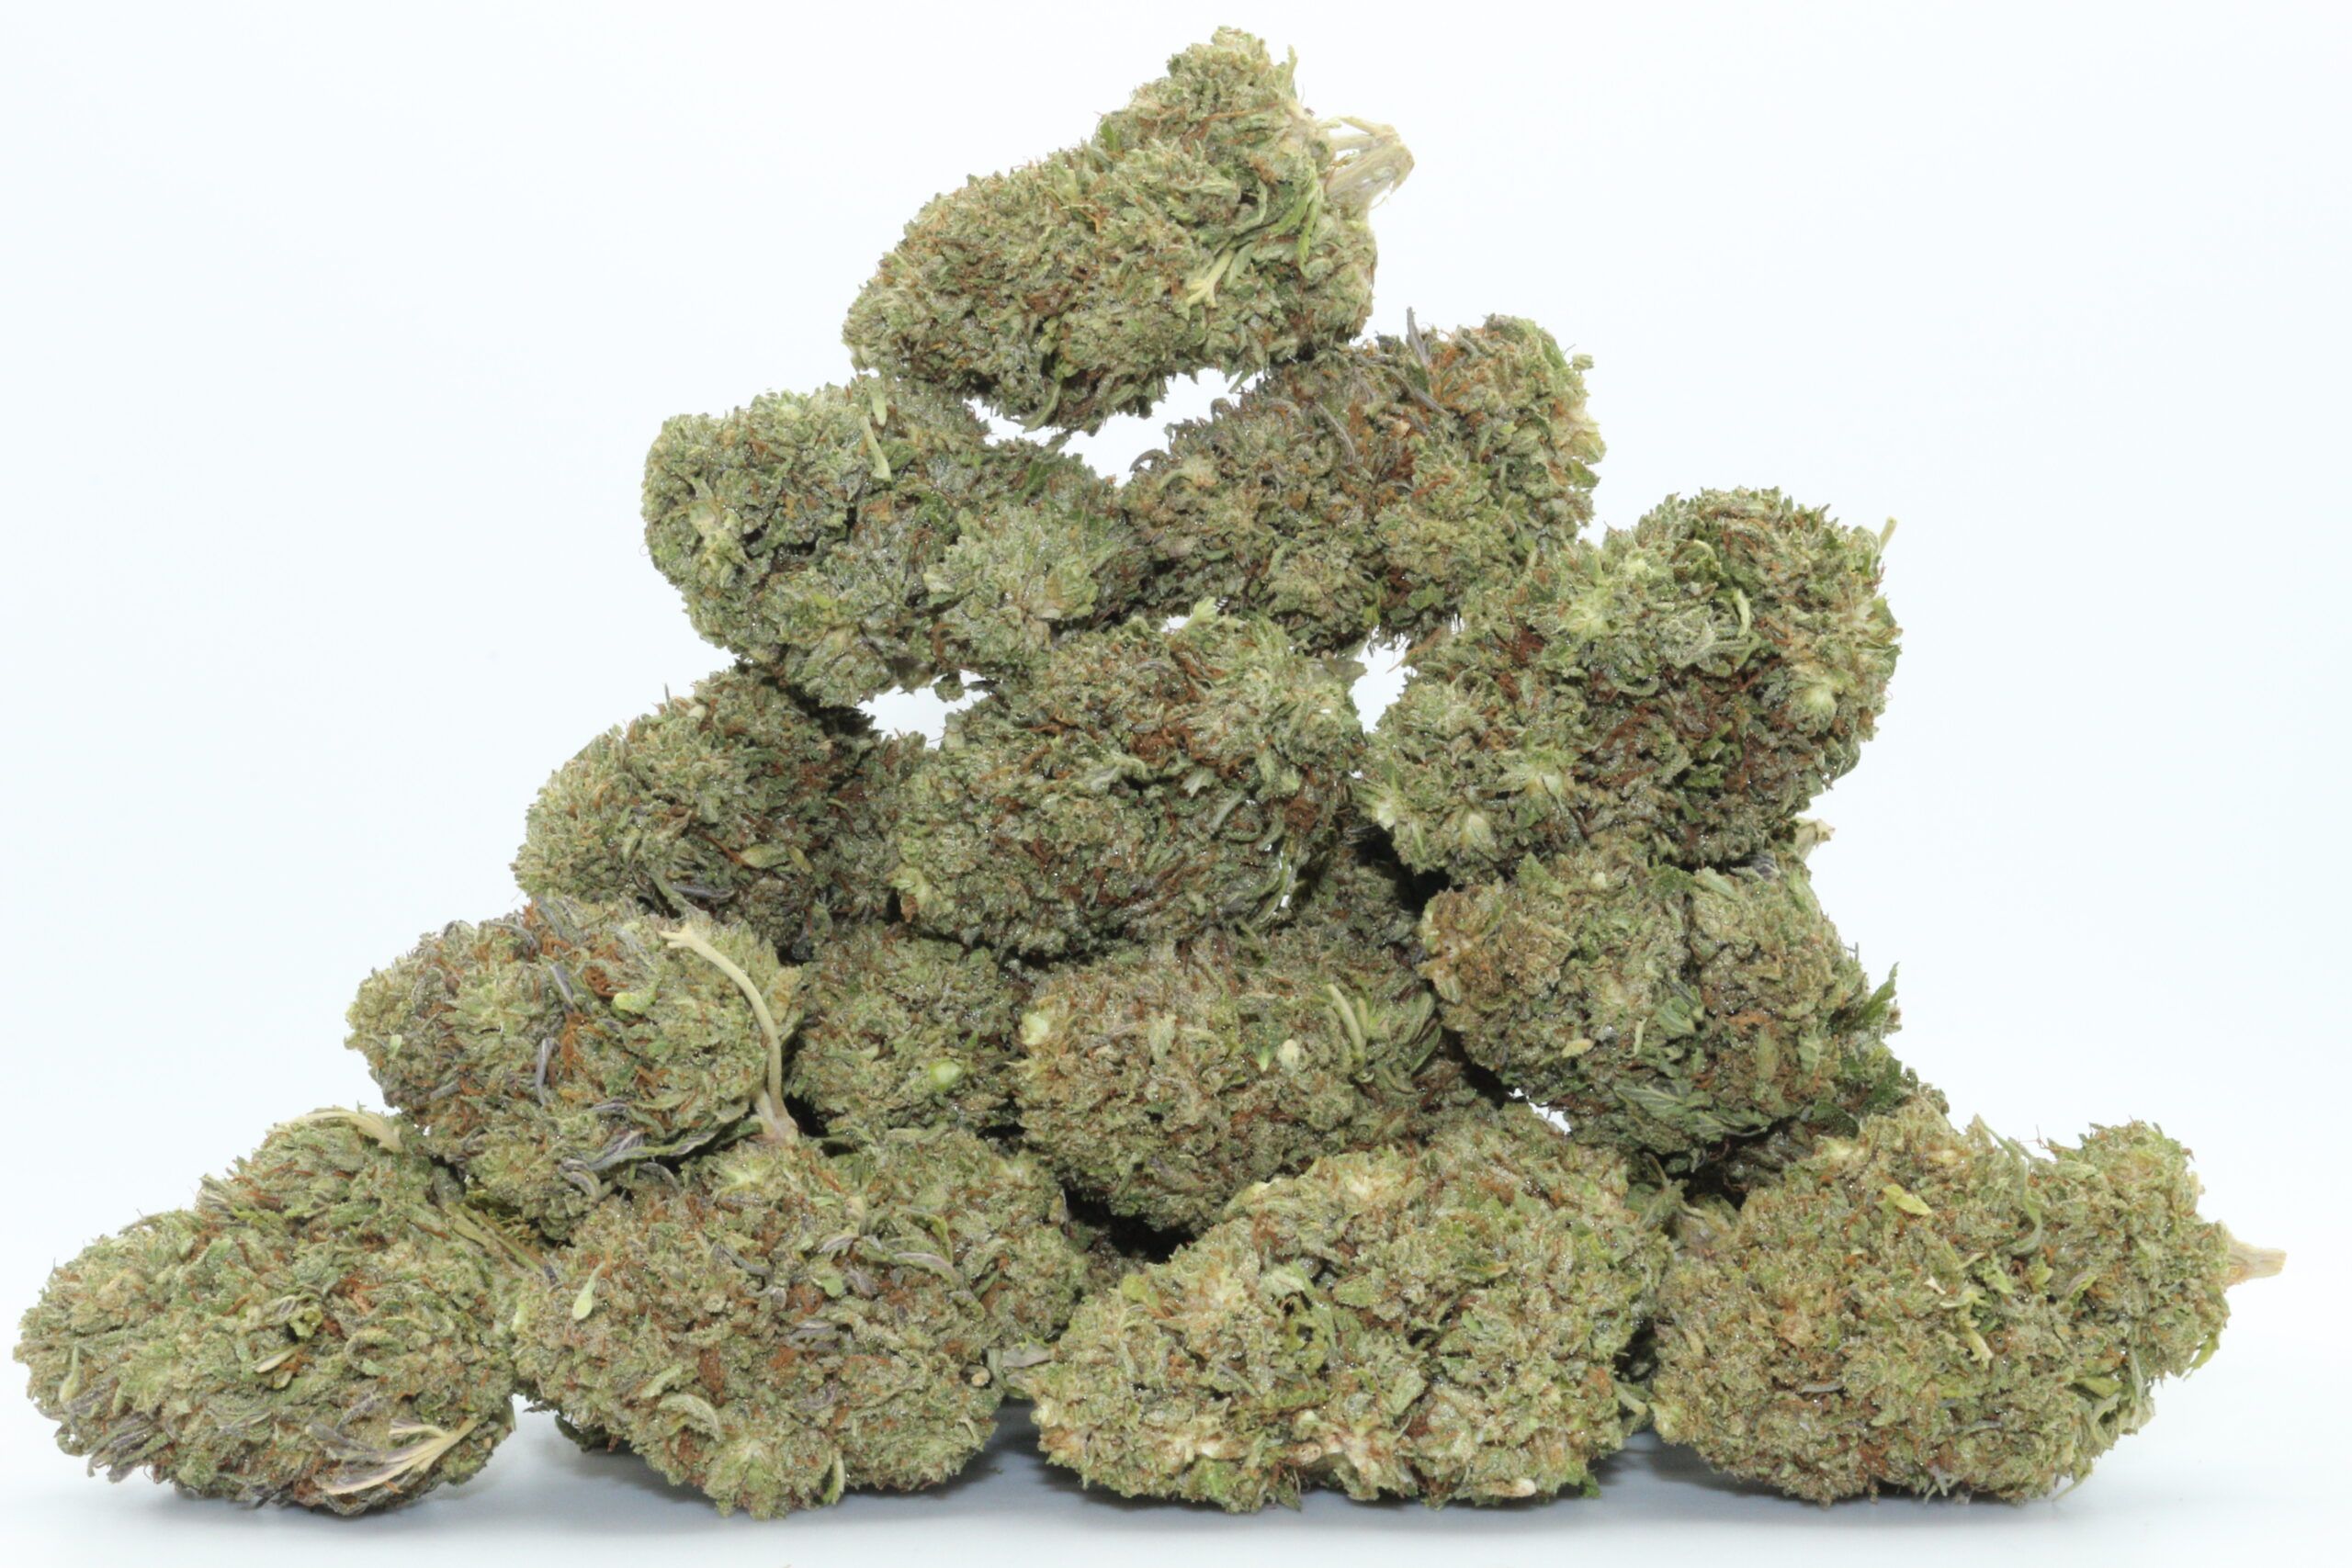 Bubba C by Organic Remedies. 🔥🔥 : r/PaMedicalMarijuana